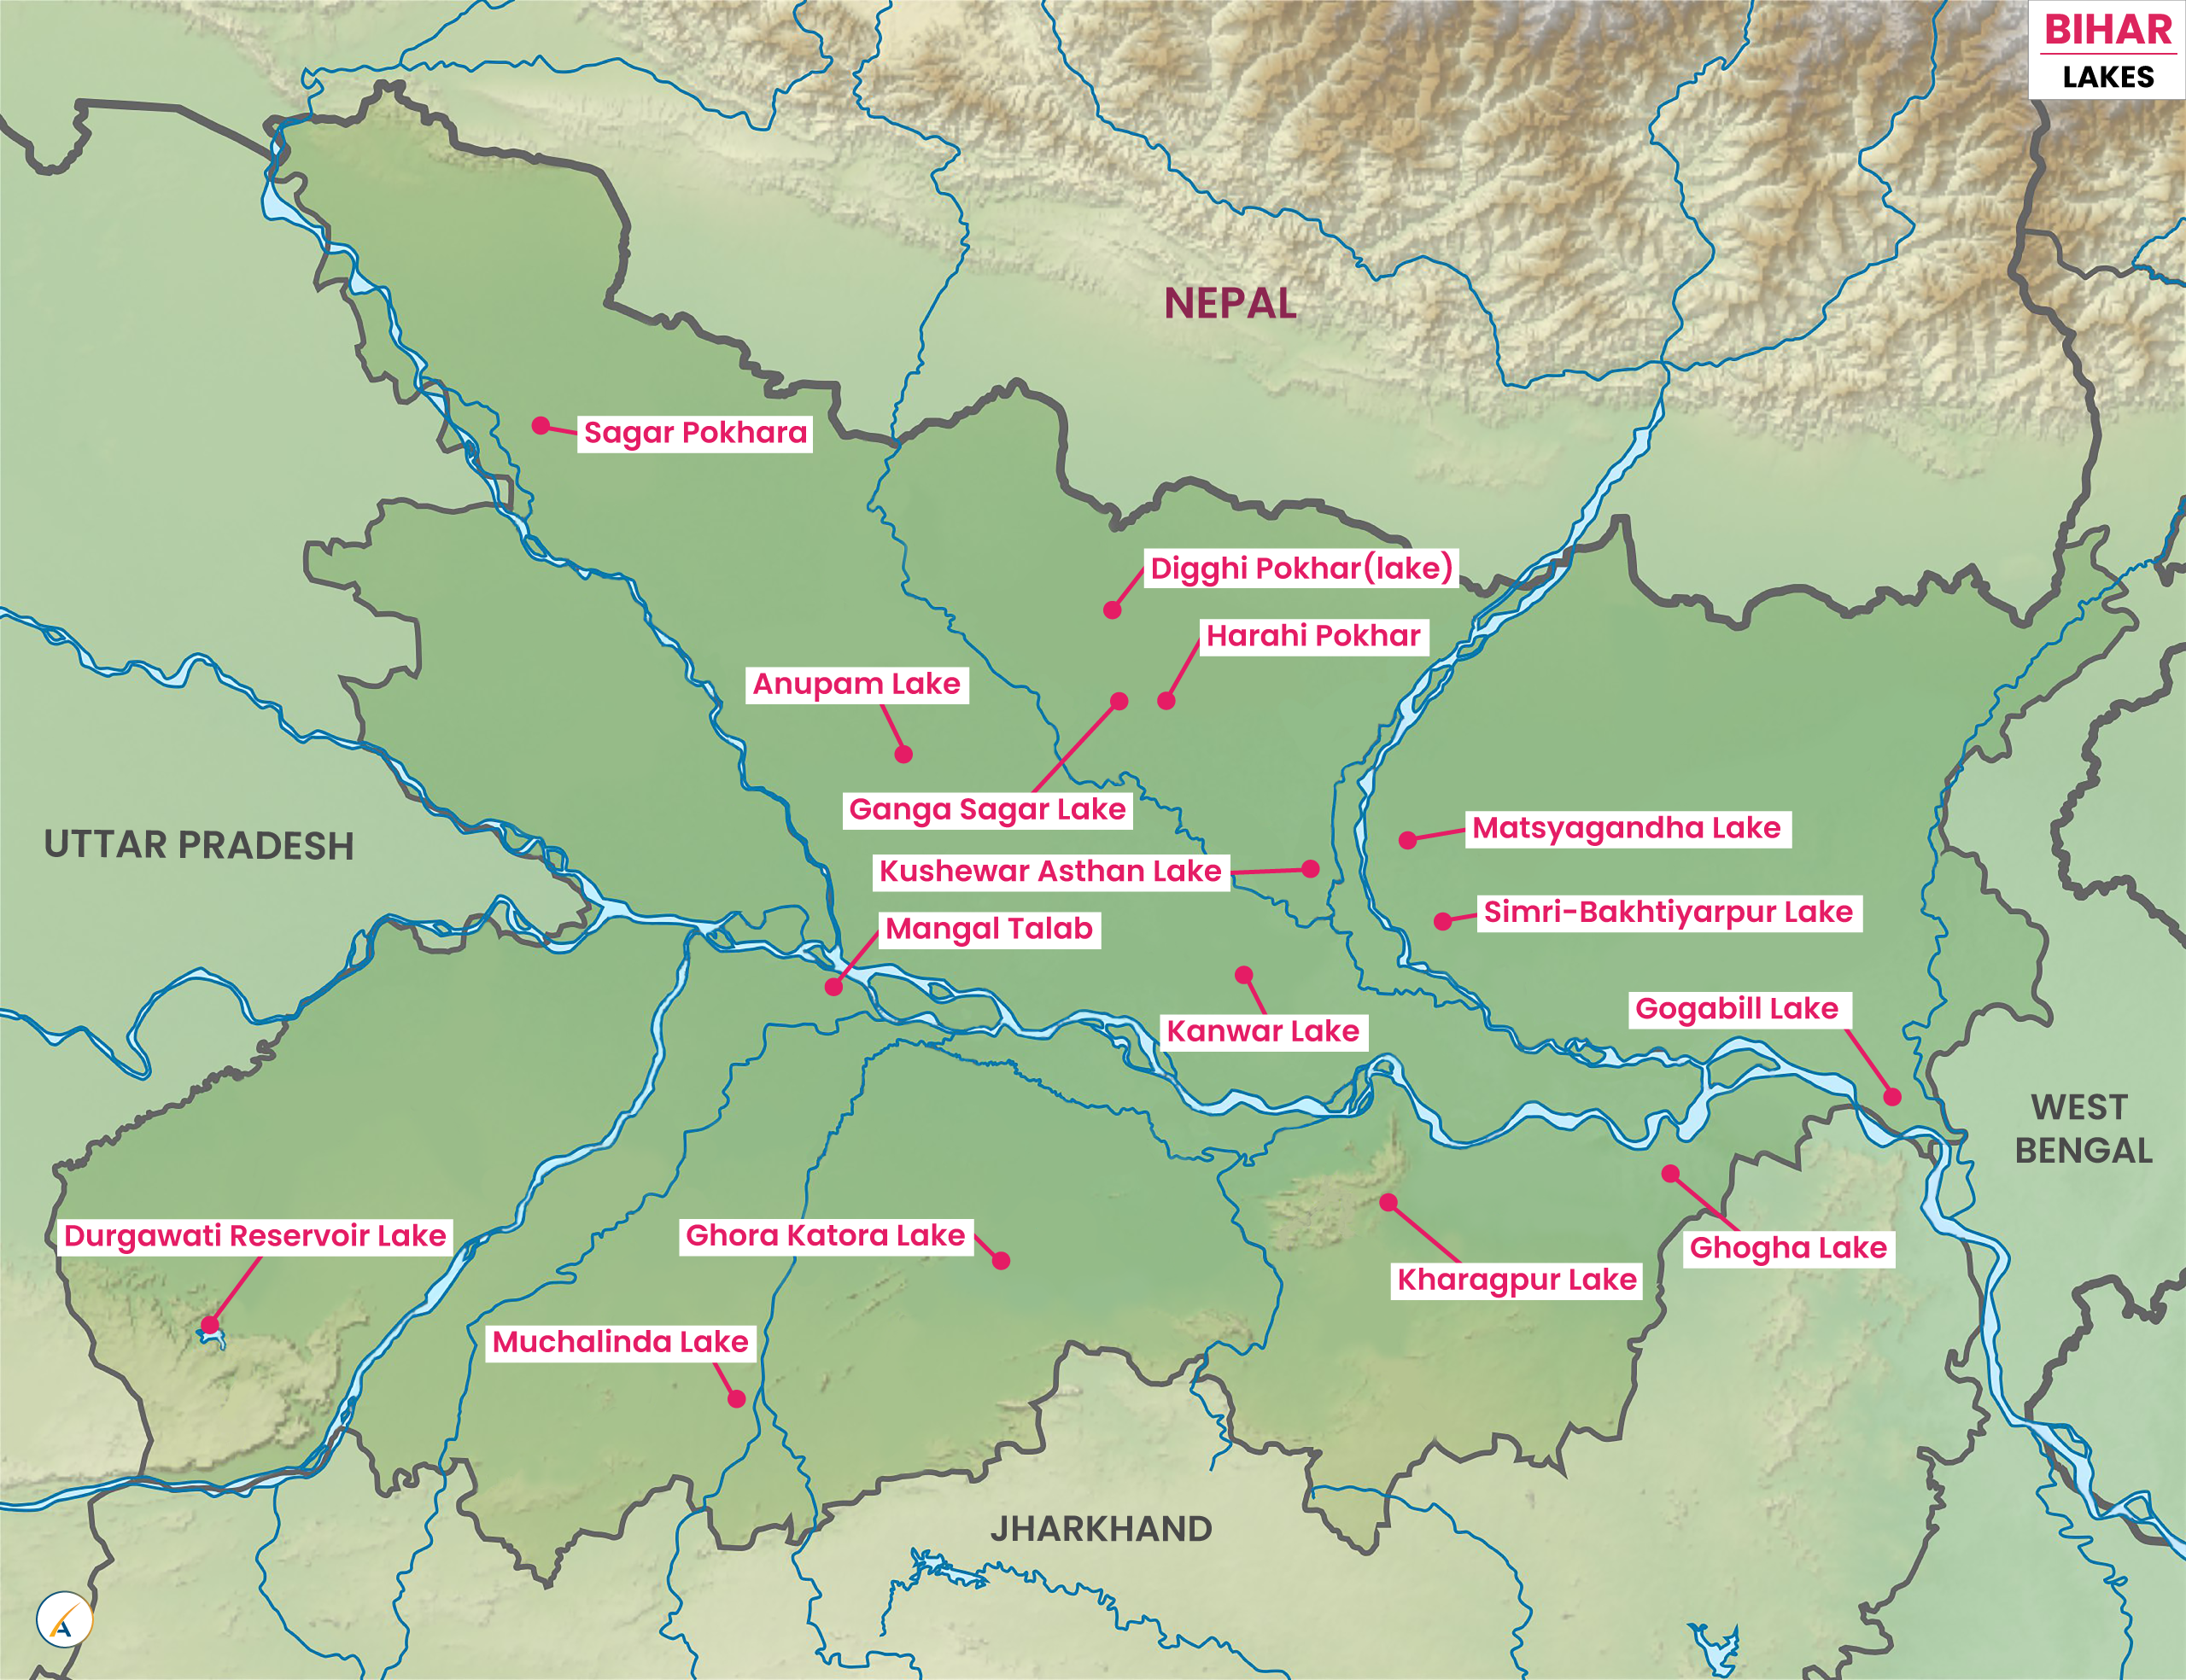 Lakes in Bihar (Map)